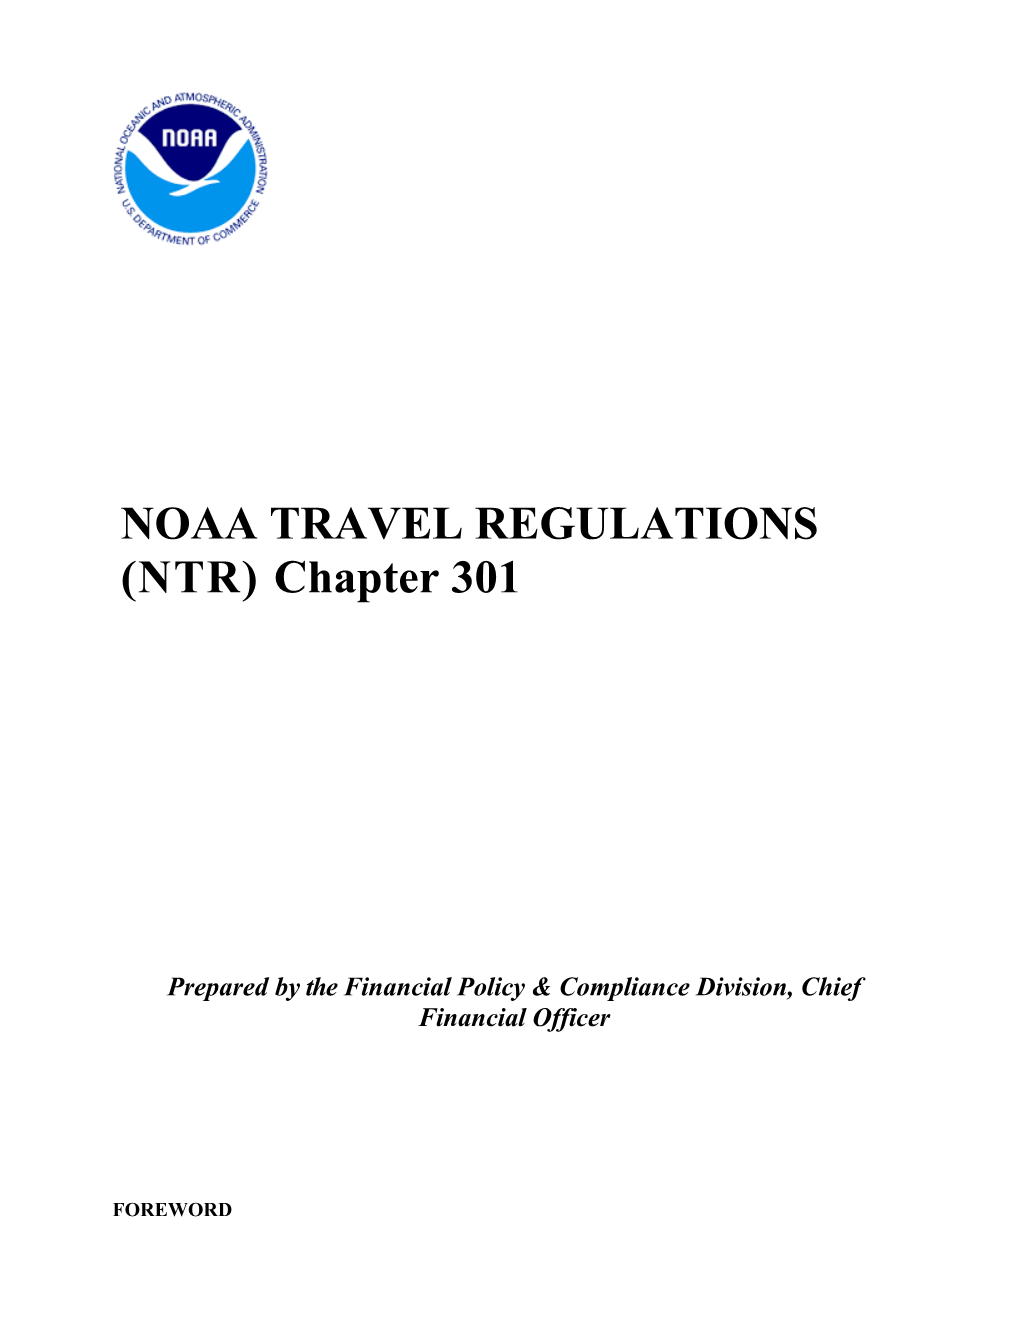 NOAA TRAVEL REGULATIONS (NTR) Chapter 301